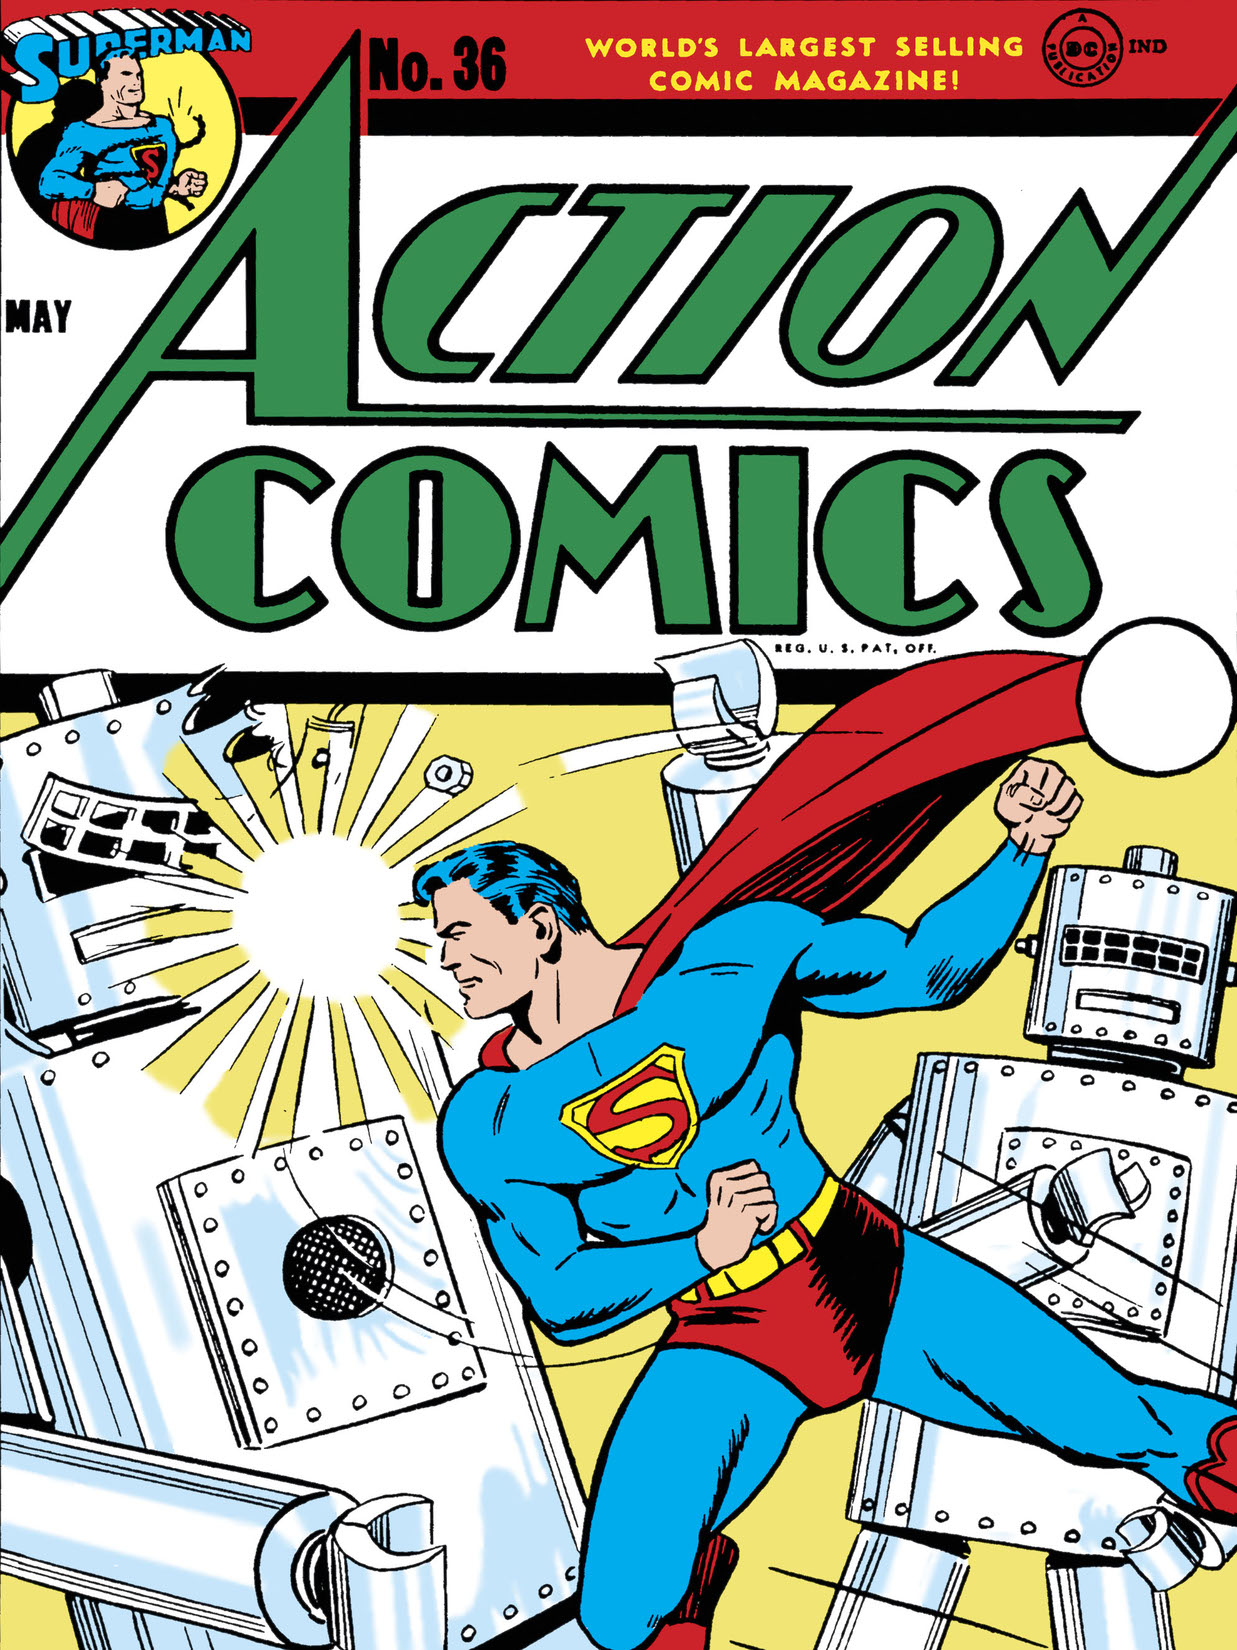 Action Comics (1938-) #36 preview images